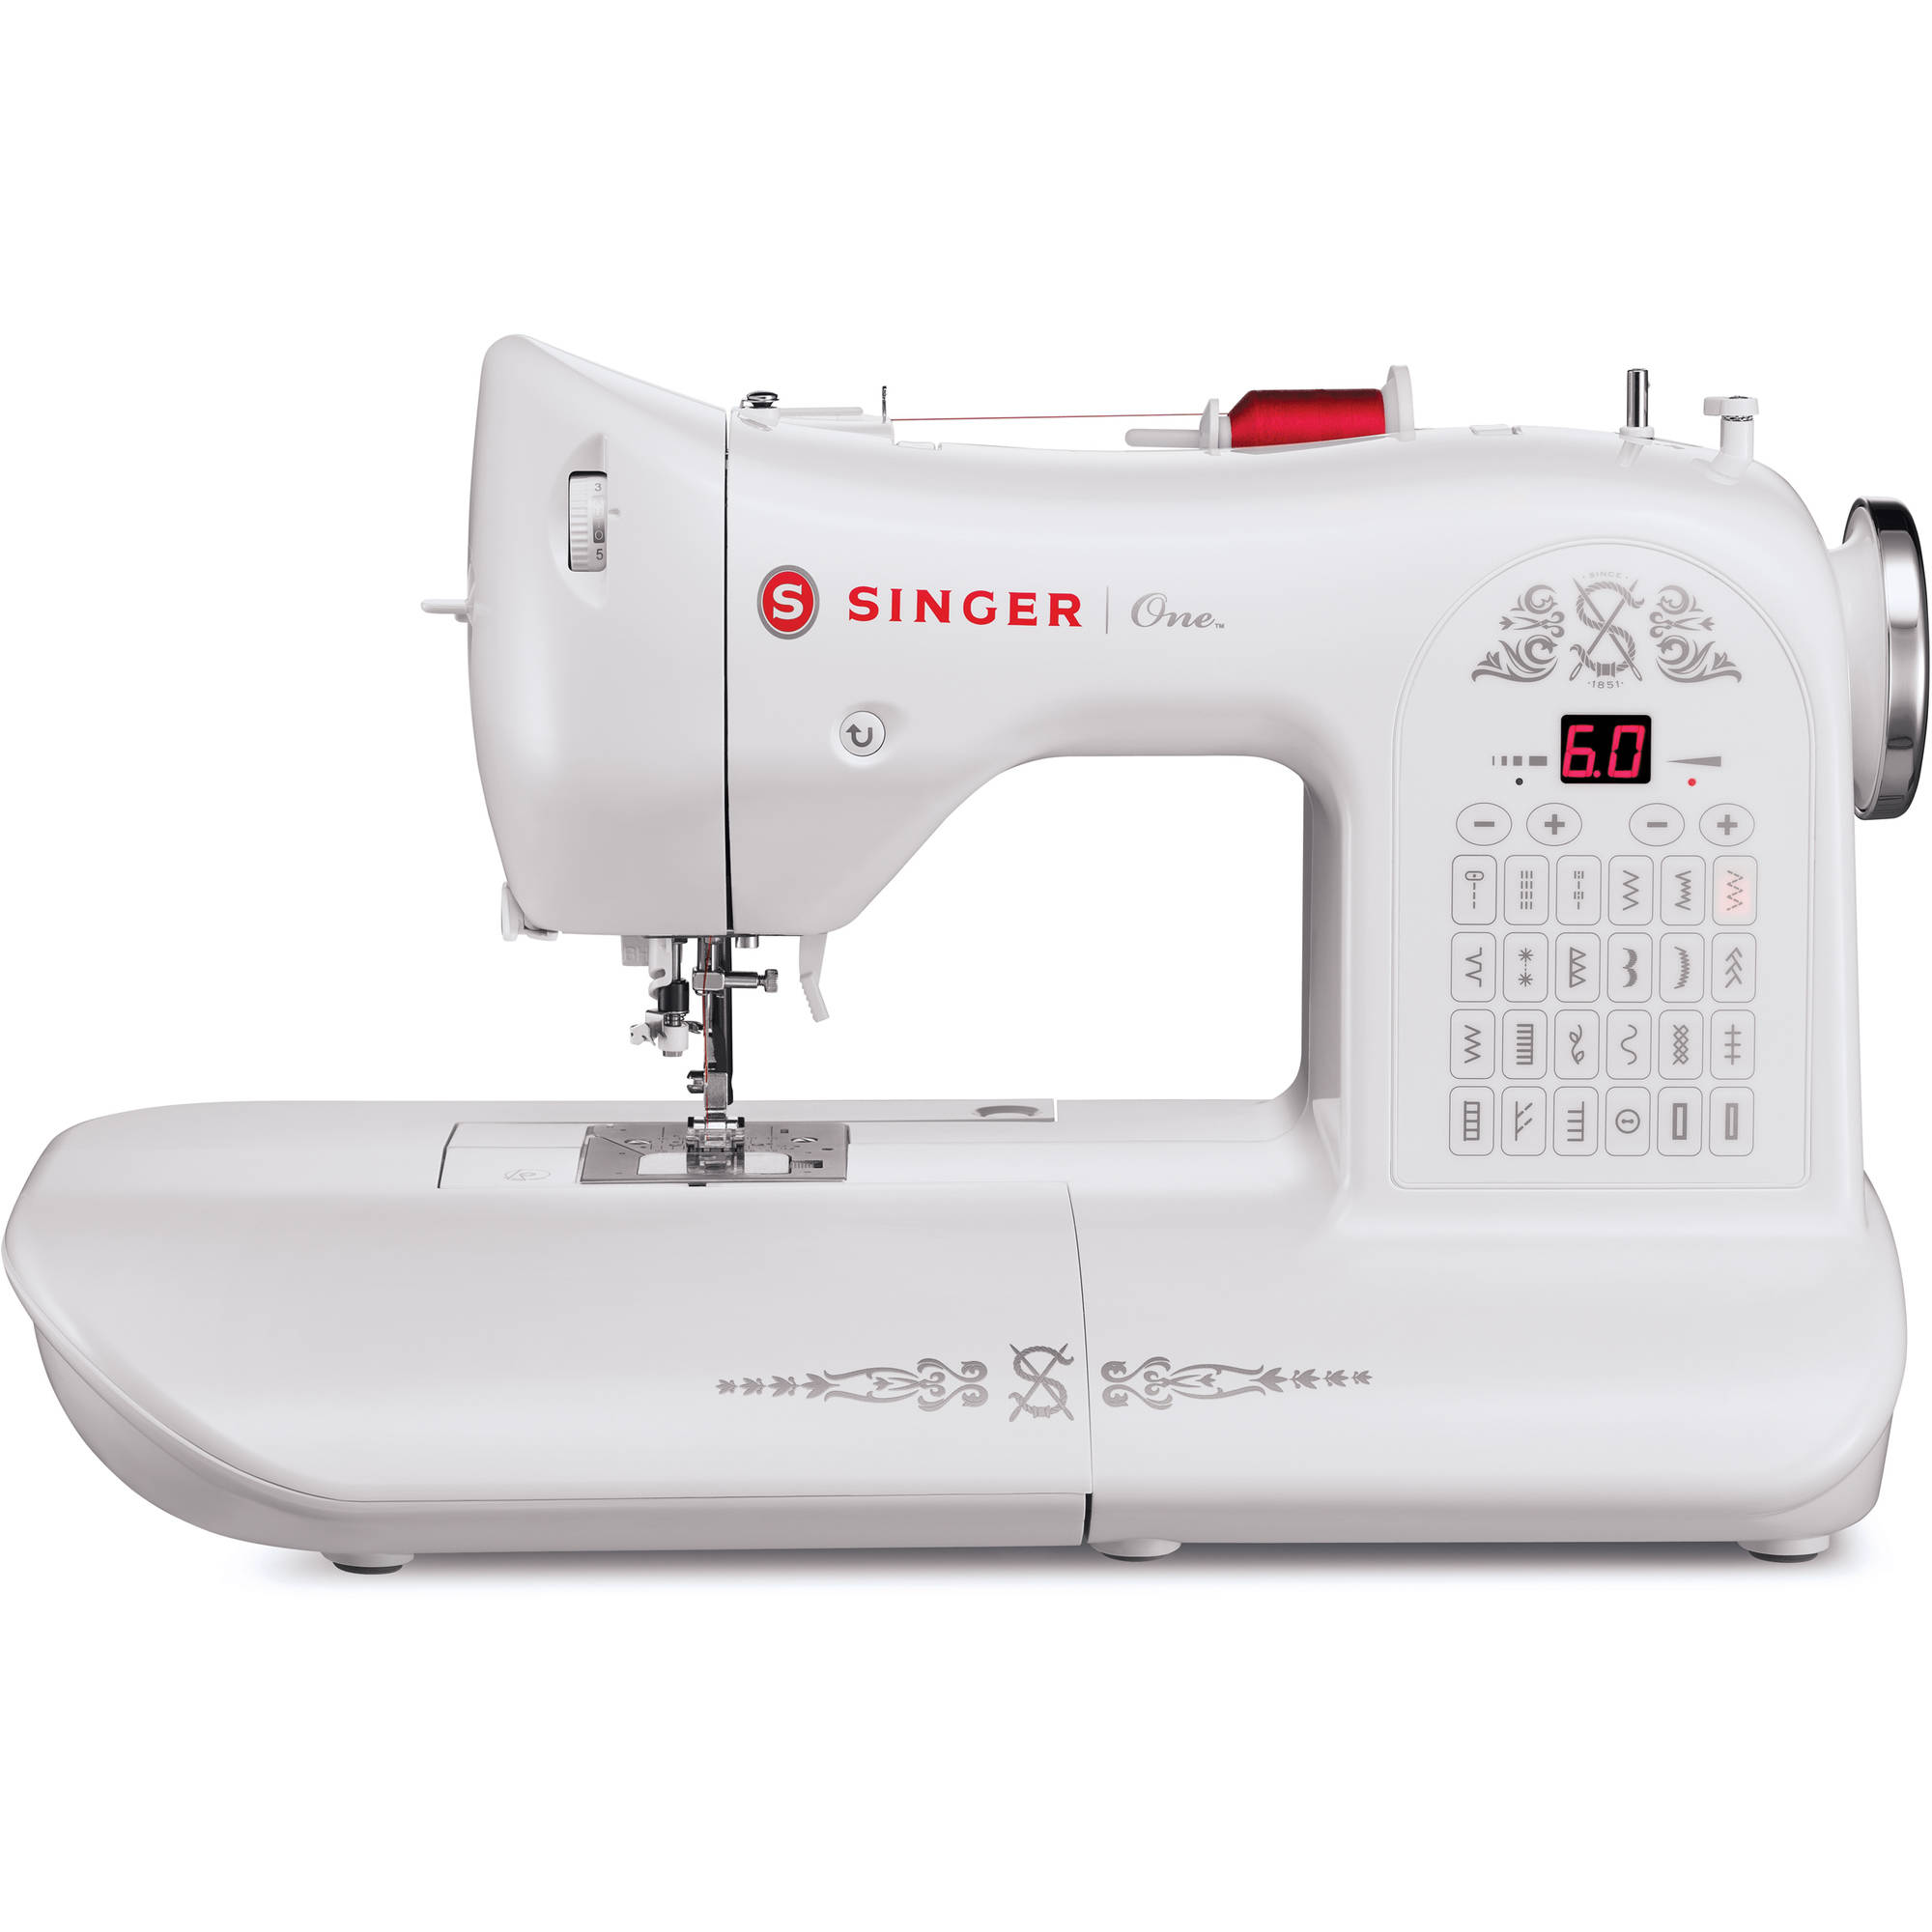 SINGER ® One 24-Stitch Sewing Machine - image 1 of 6